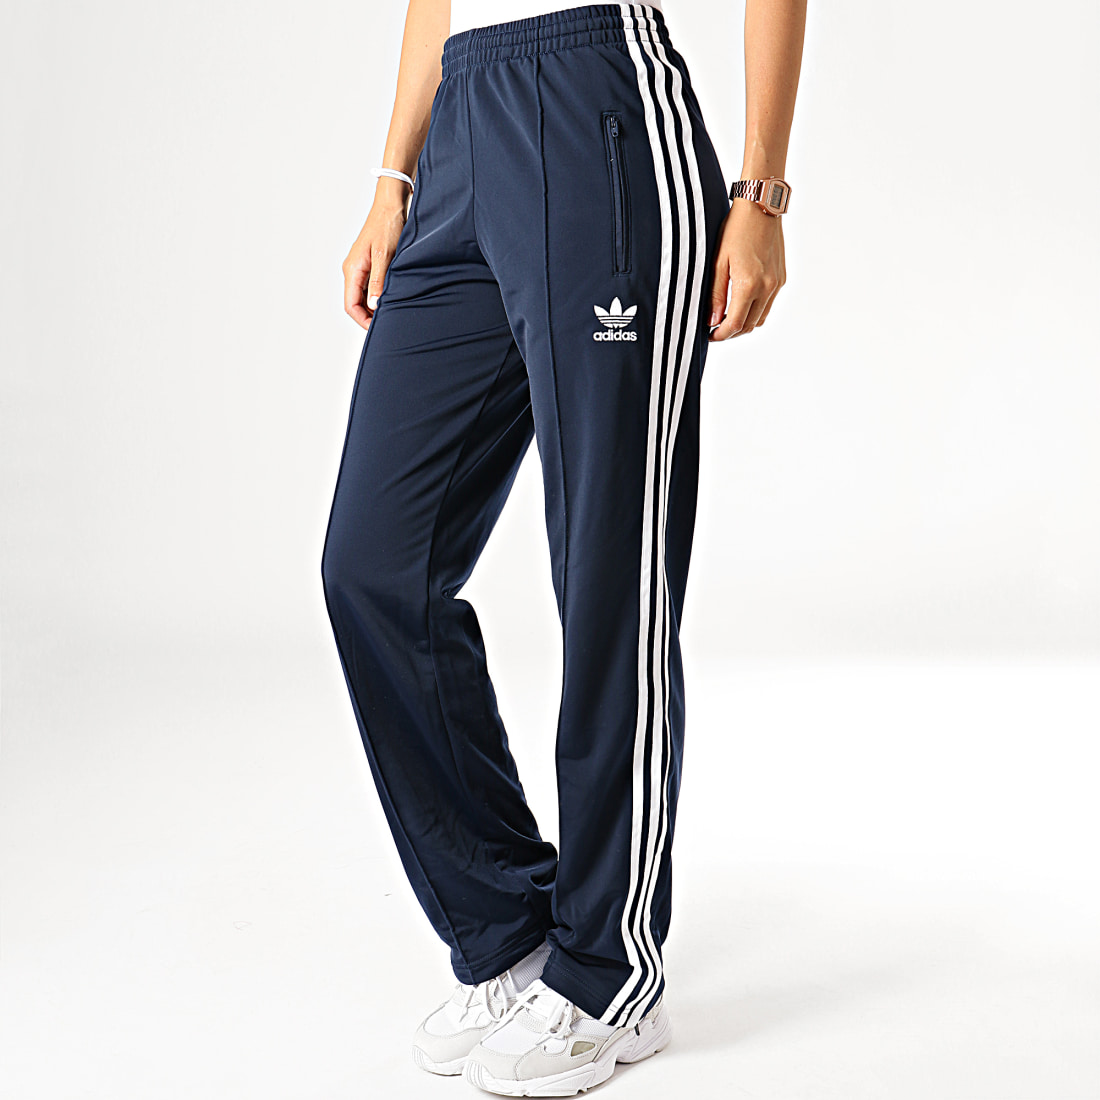 Ga terug Natura overdracht Adidas Originals - Pantalon Jogging Femme Firebird TP ED7509 Bleu Marine  Blanc - LaBoutiqueOfficielle.com